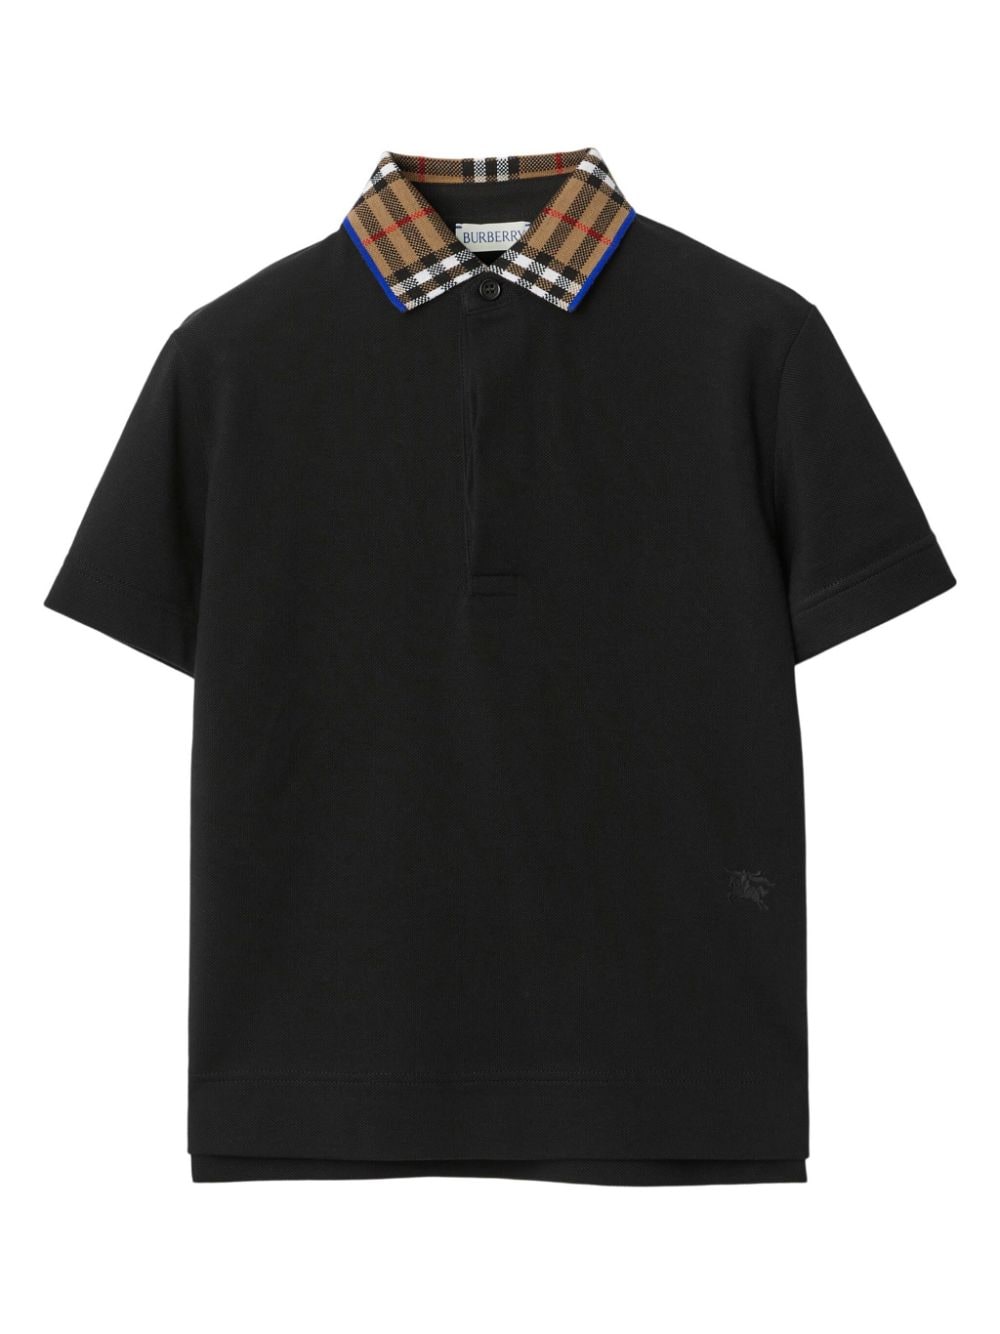 Contrast-collar cotton polo shirt<BR/><BR/><BR/>